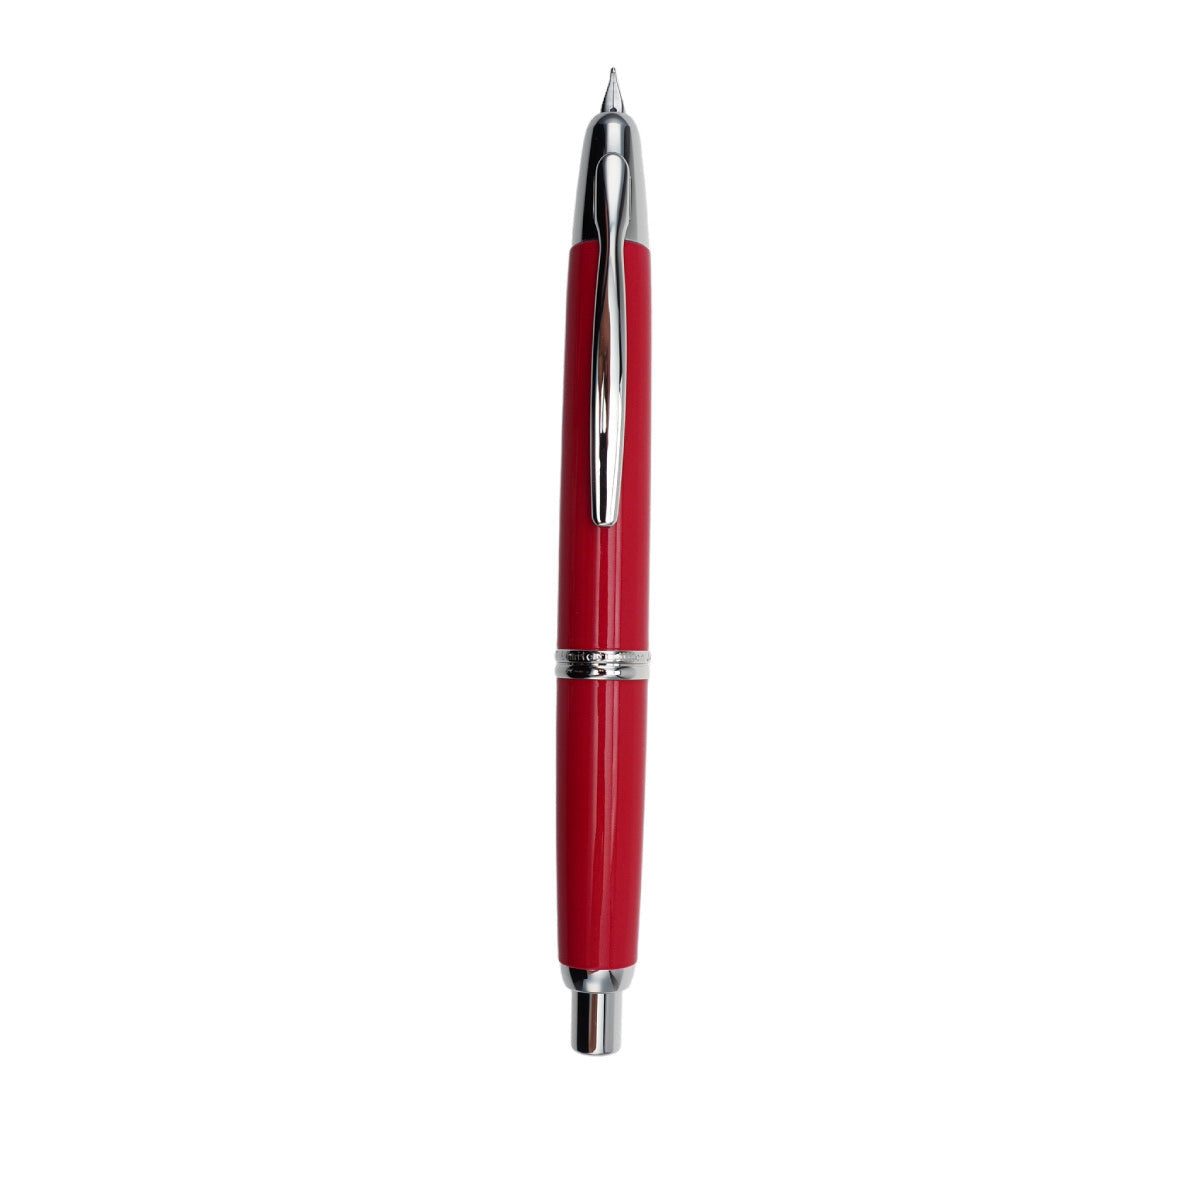 Pilot Capless Ltd 2022 Red Coral fountain pen